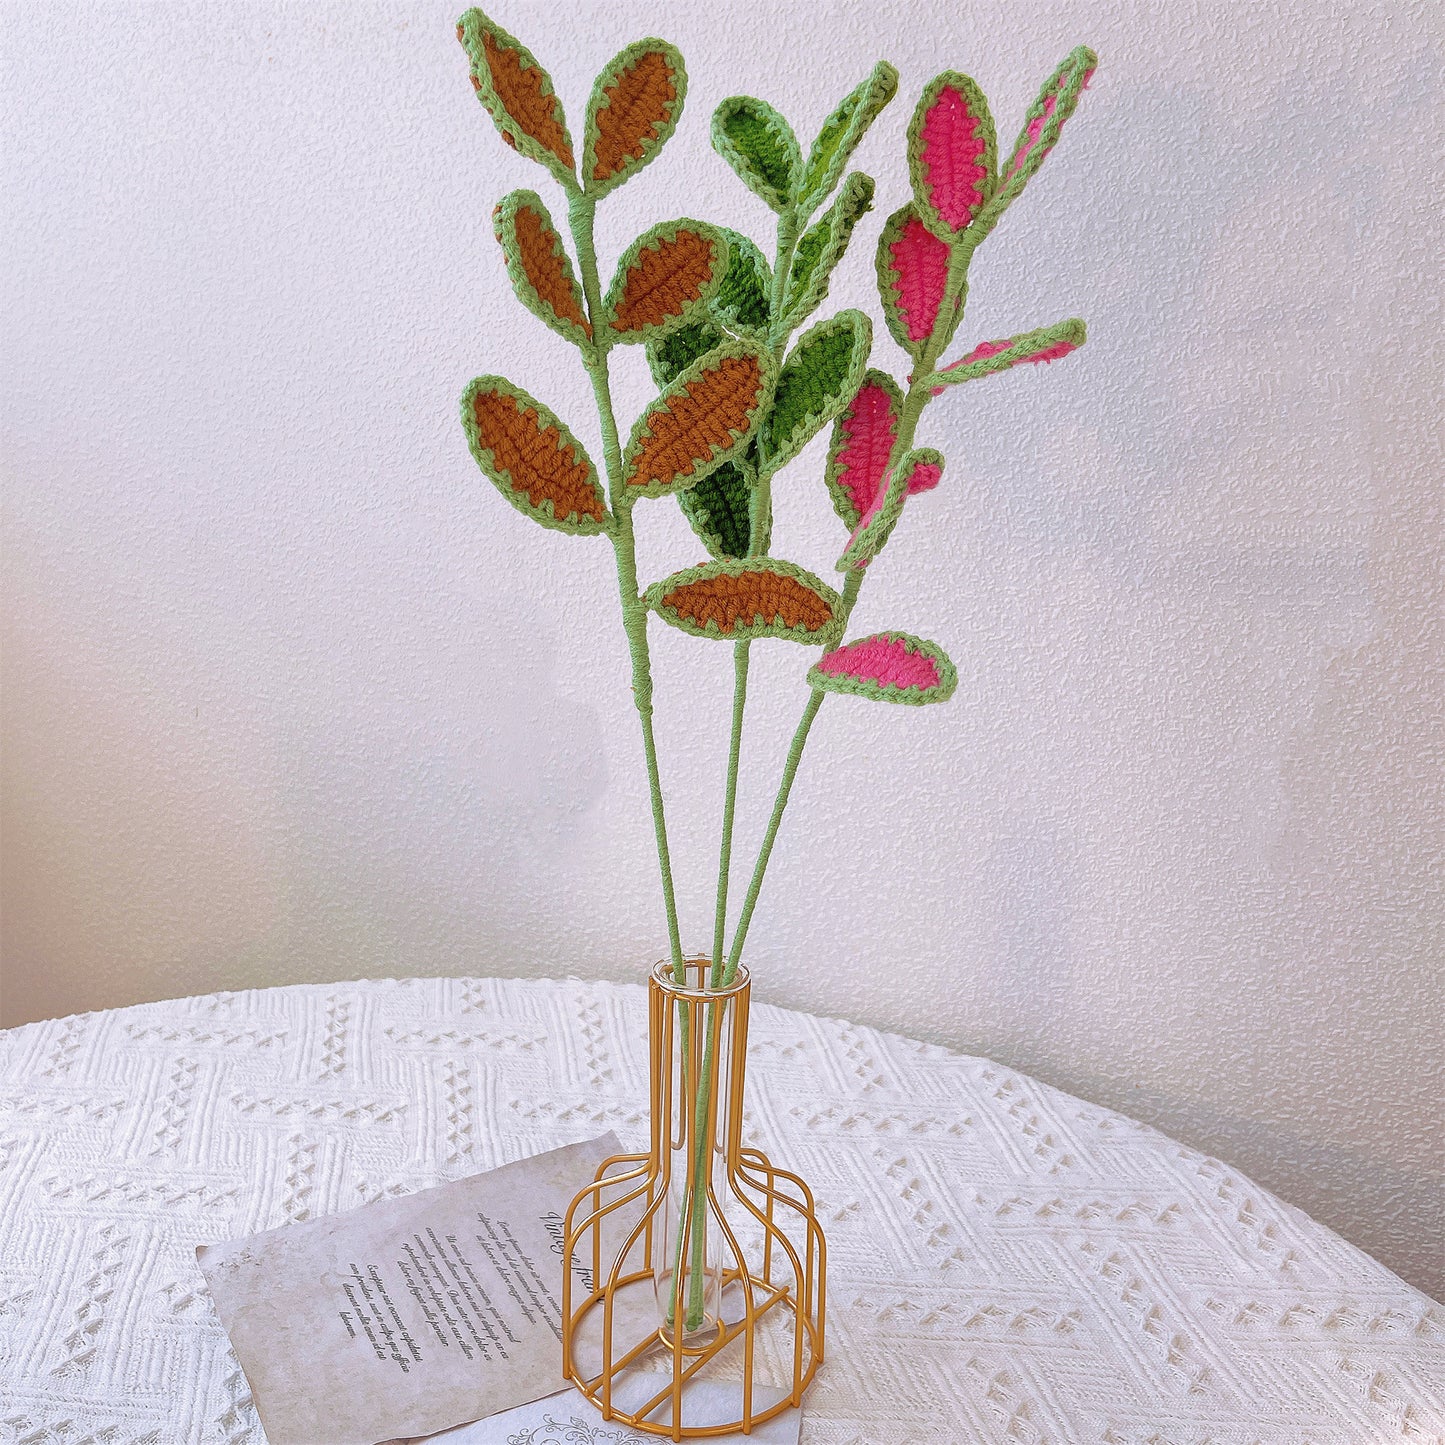 Handmade Crochet Embroidered Lace Decoration Leaf - Wedding Elegant Home Decor Accent for Vase Centerpiece